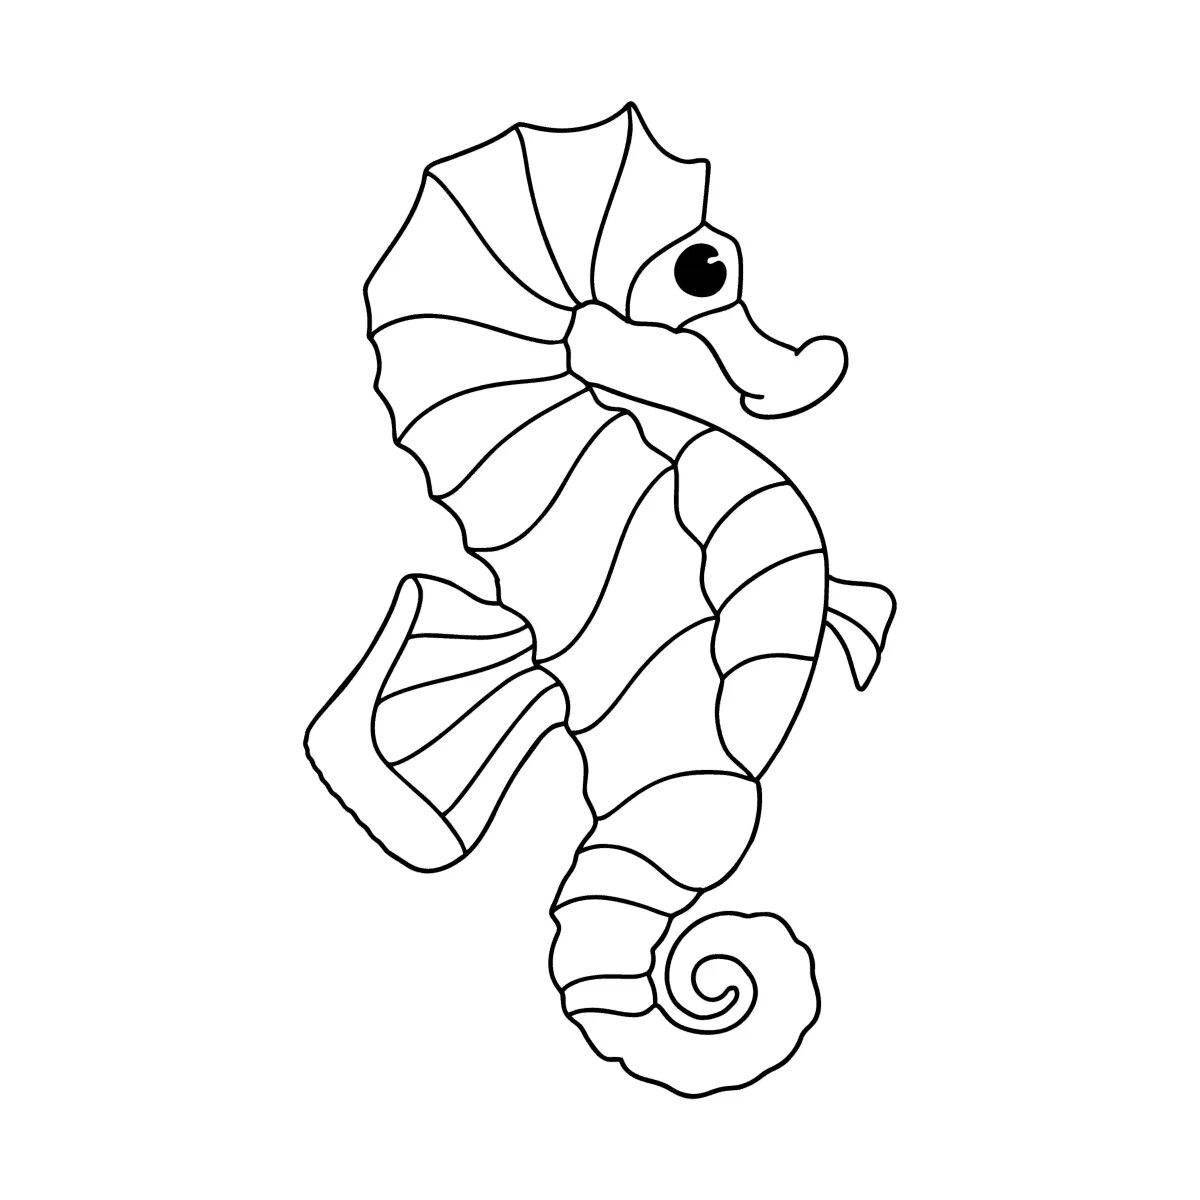 A fun seahorse coloring book for kids